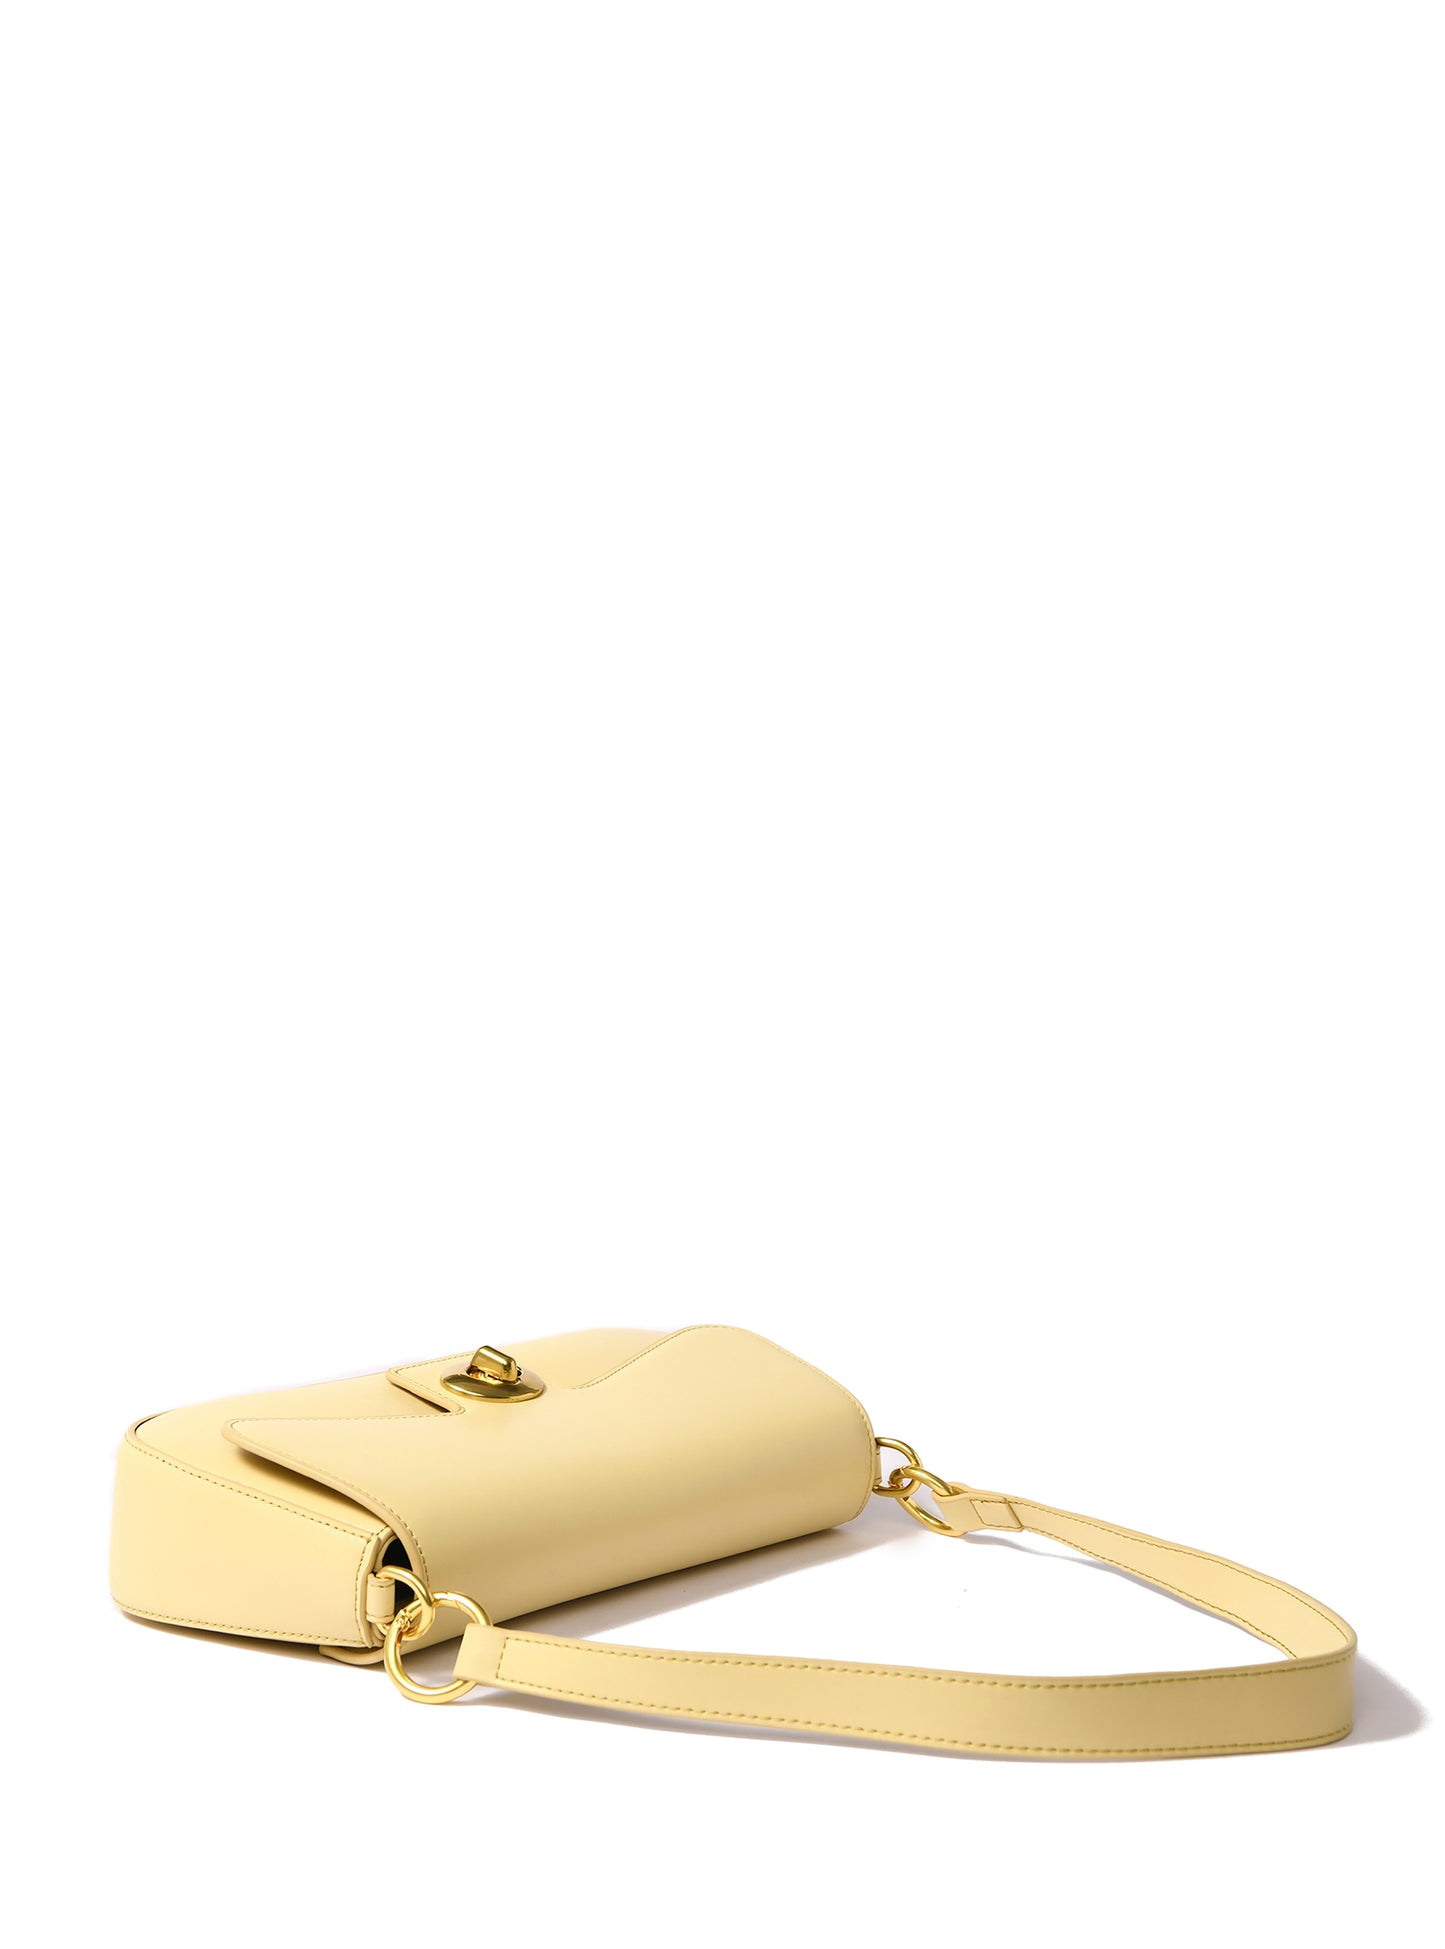 Jacqueline Leather Bag, Yellow